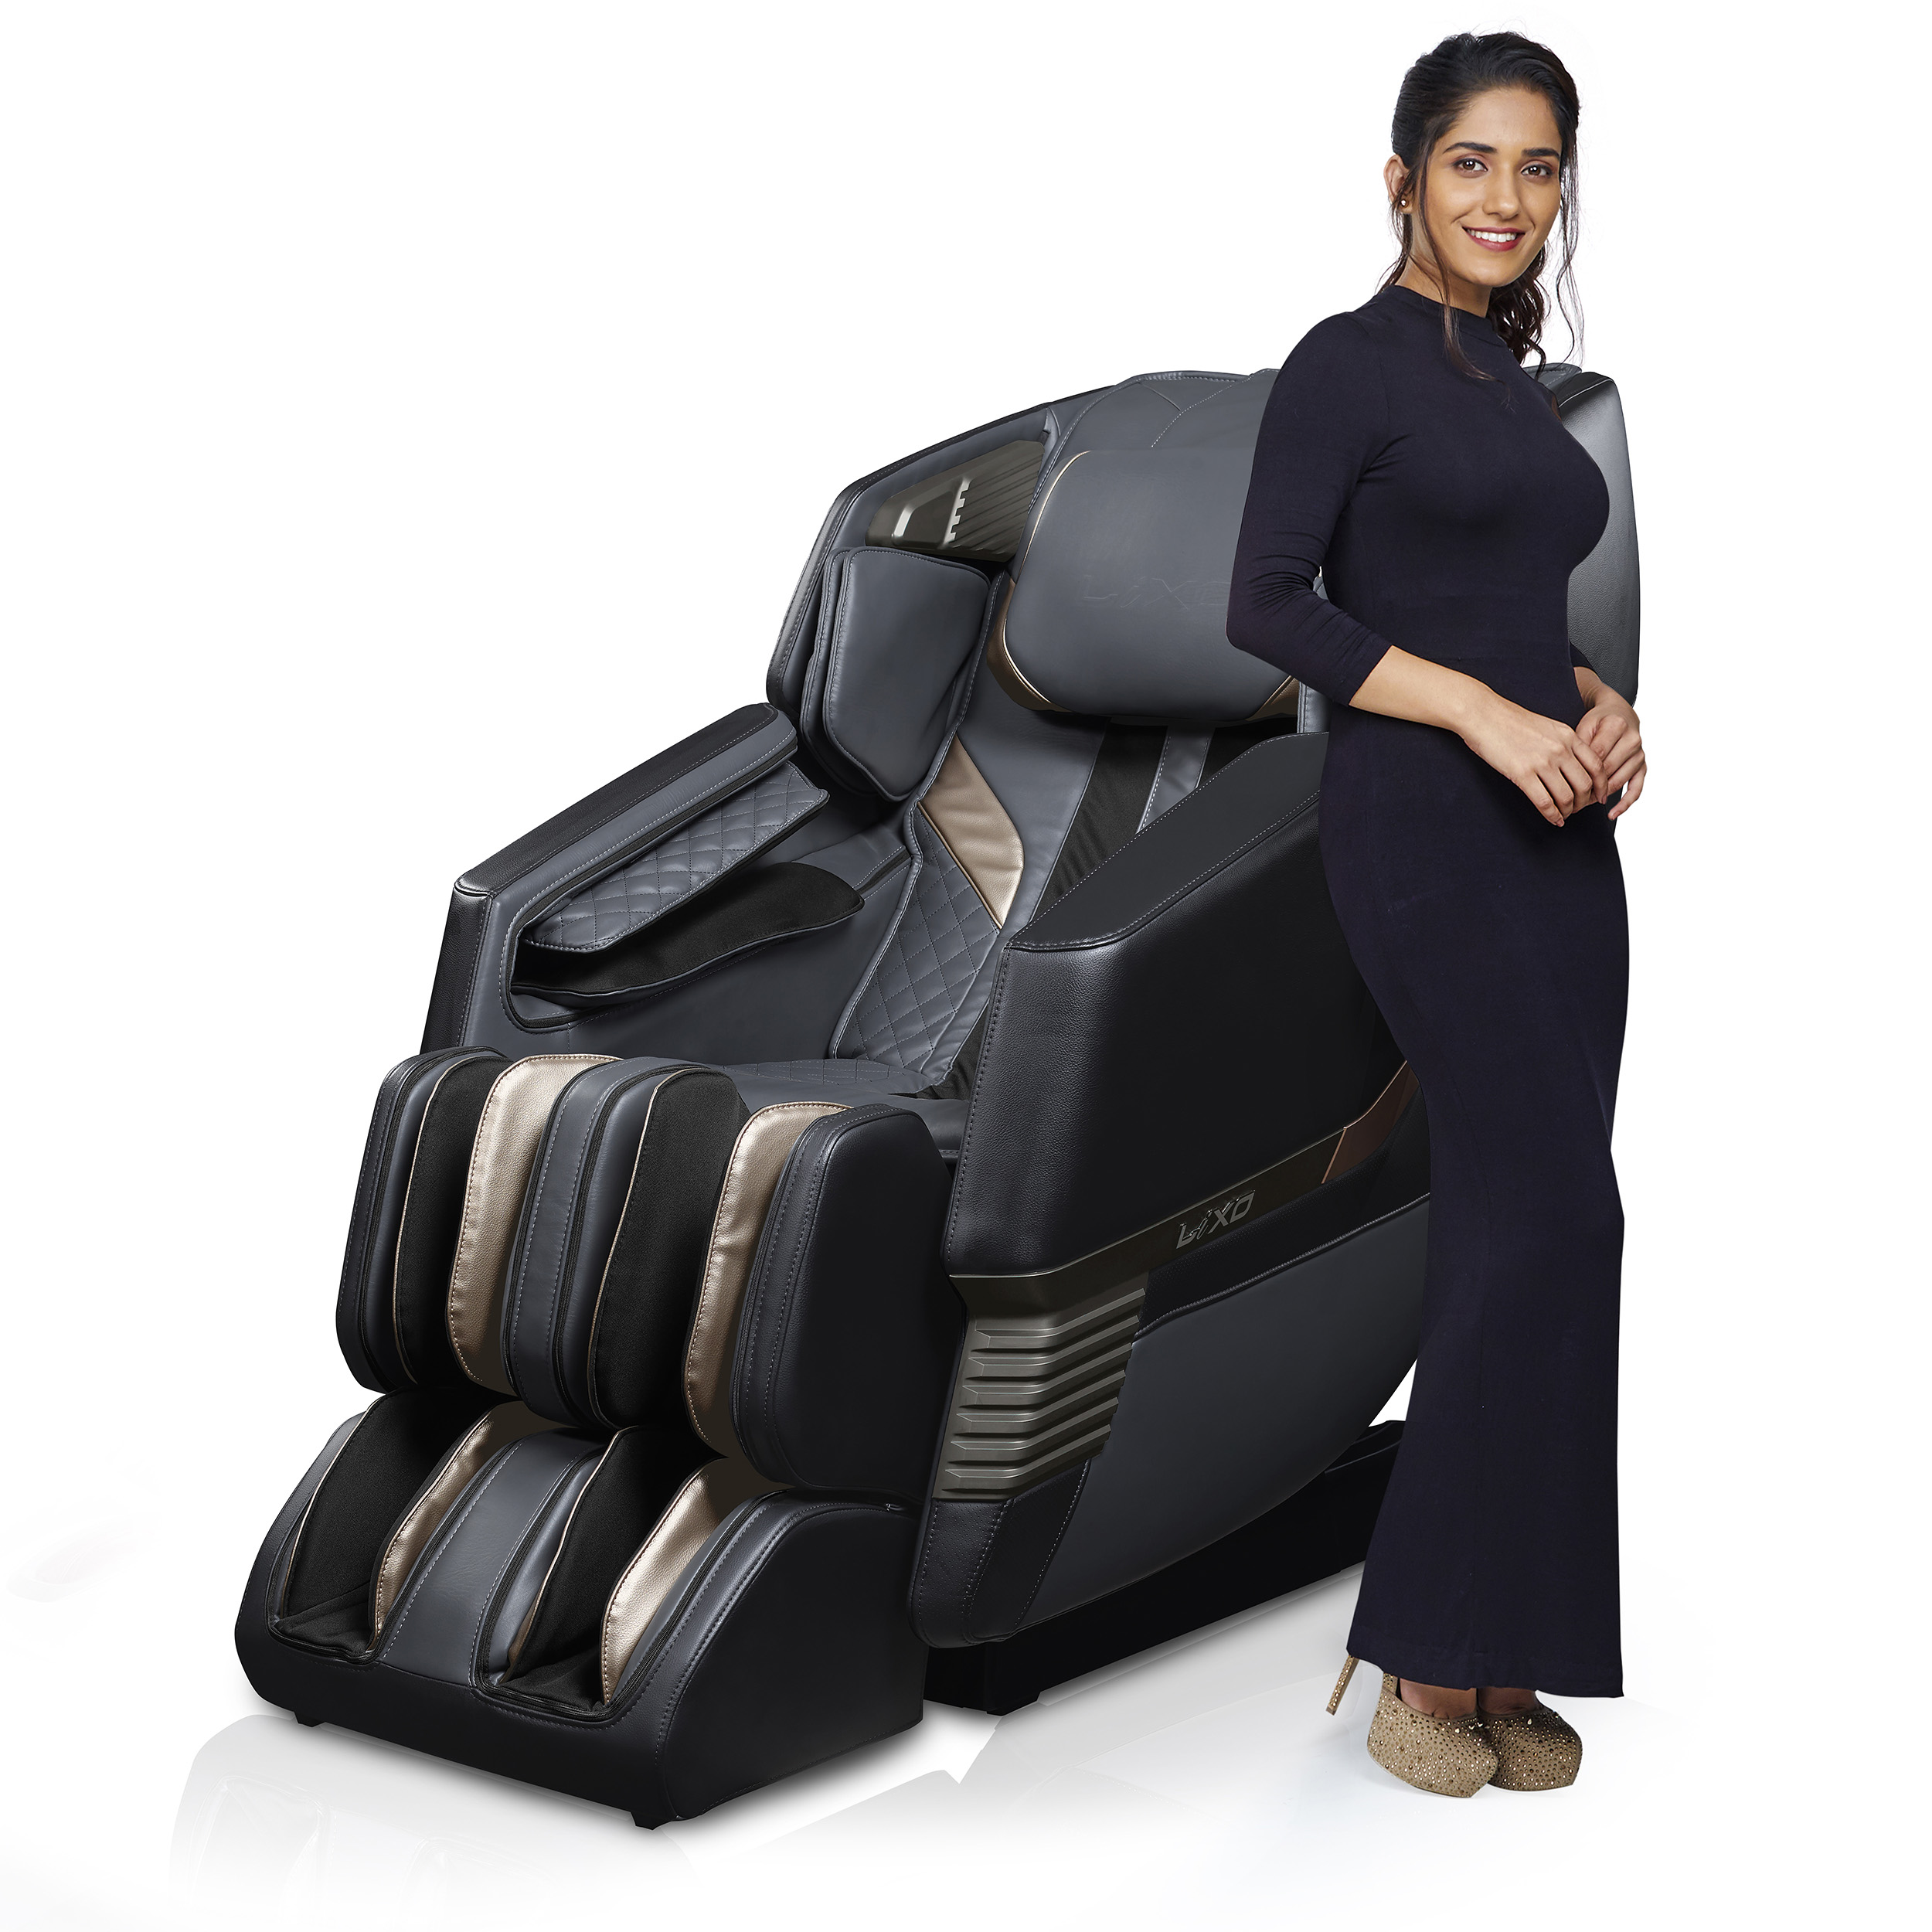 Massage Chair With Zero Gravity